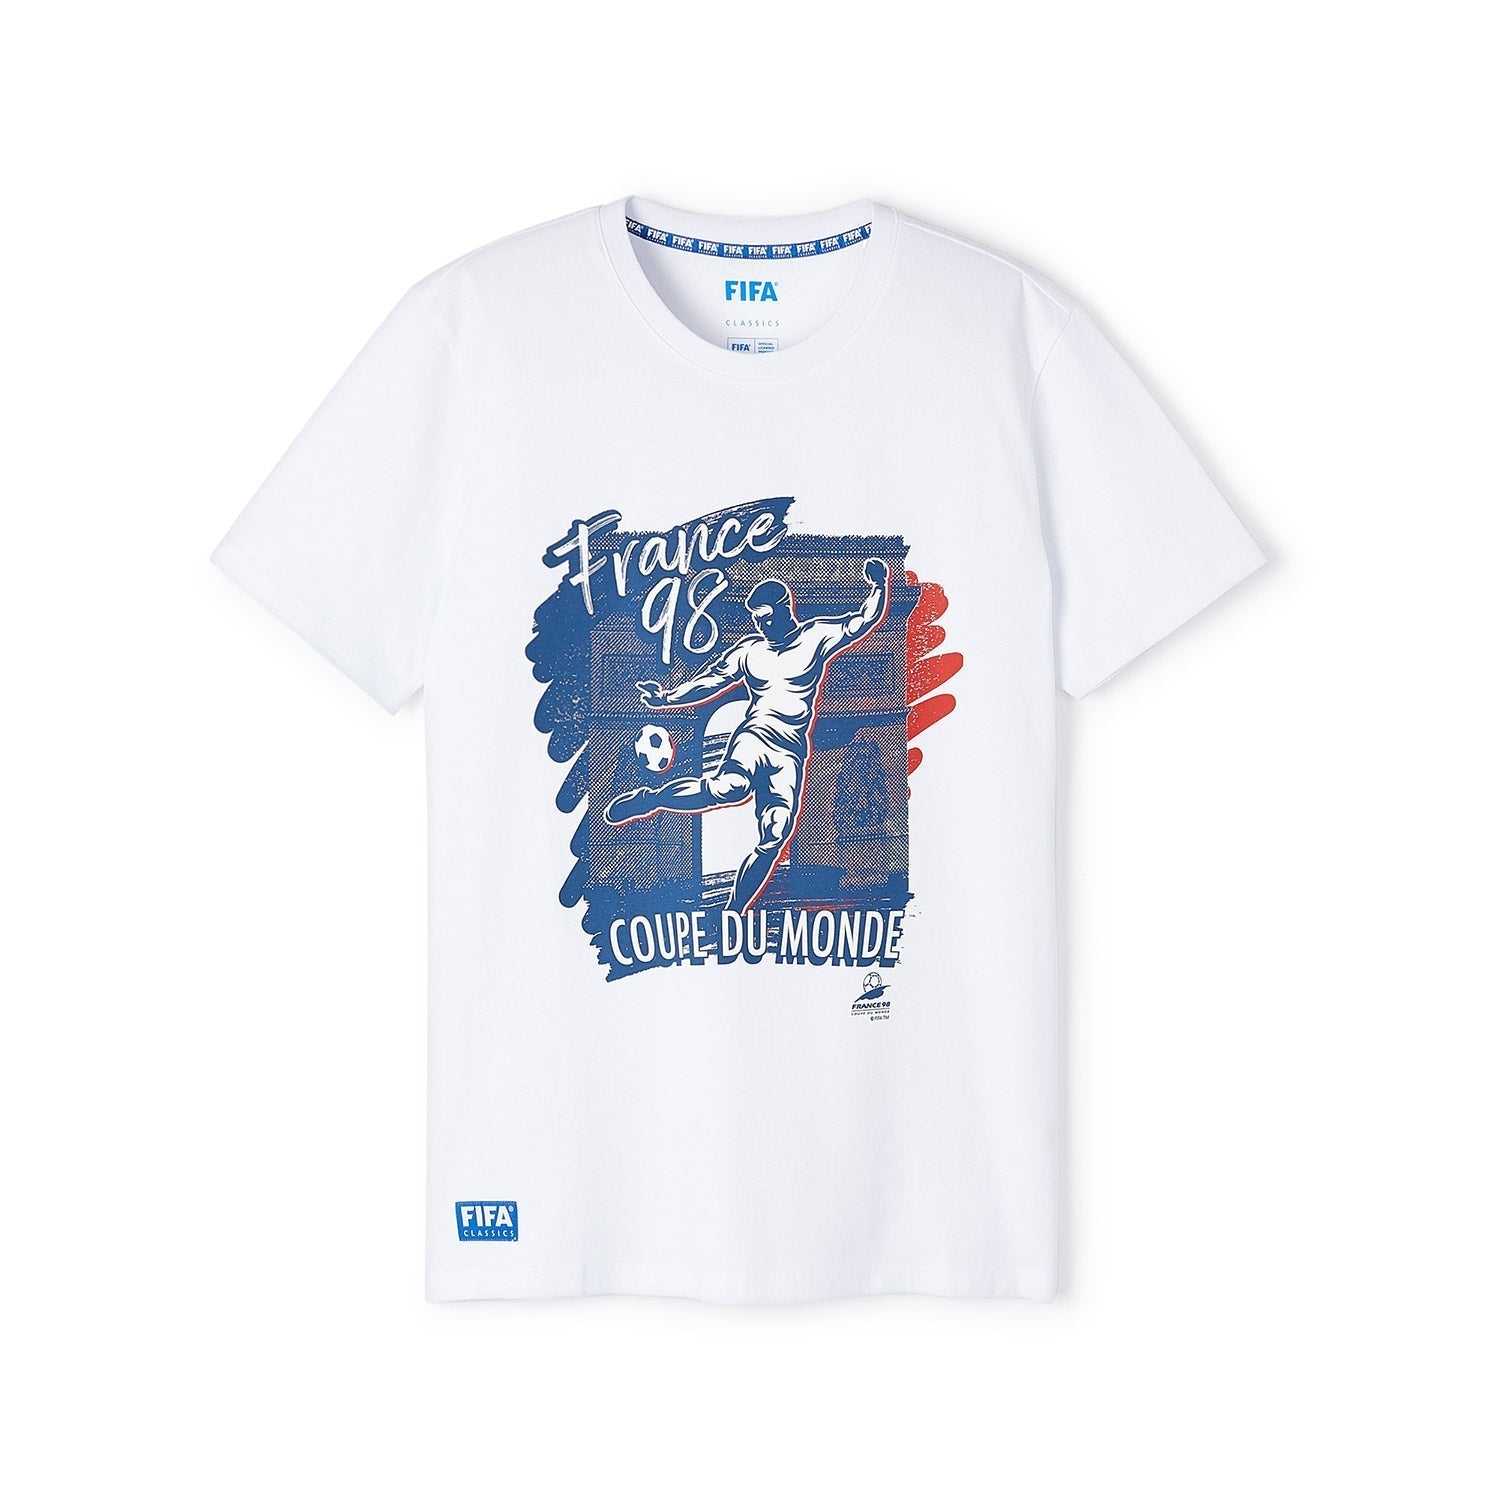 FIFA Classics France '98 - Coupe Du Monde T-Shirt